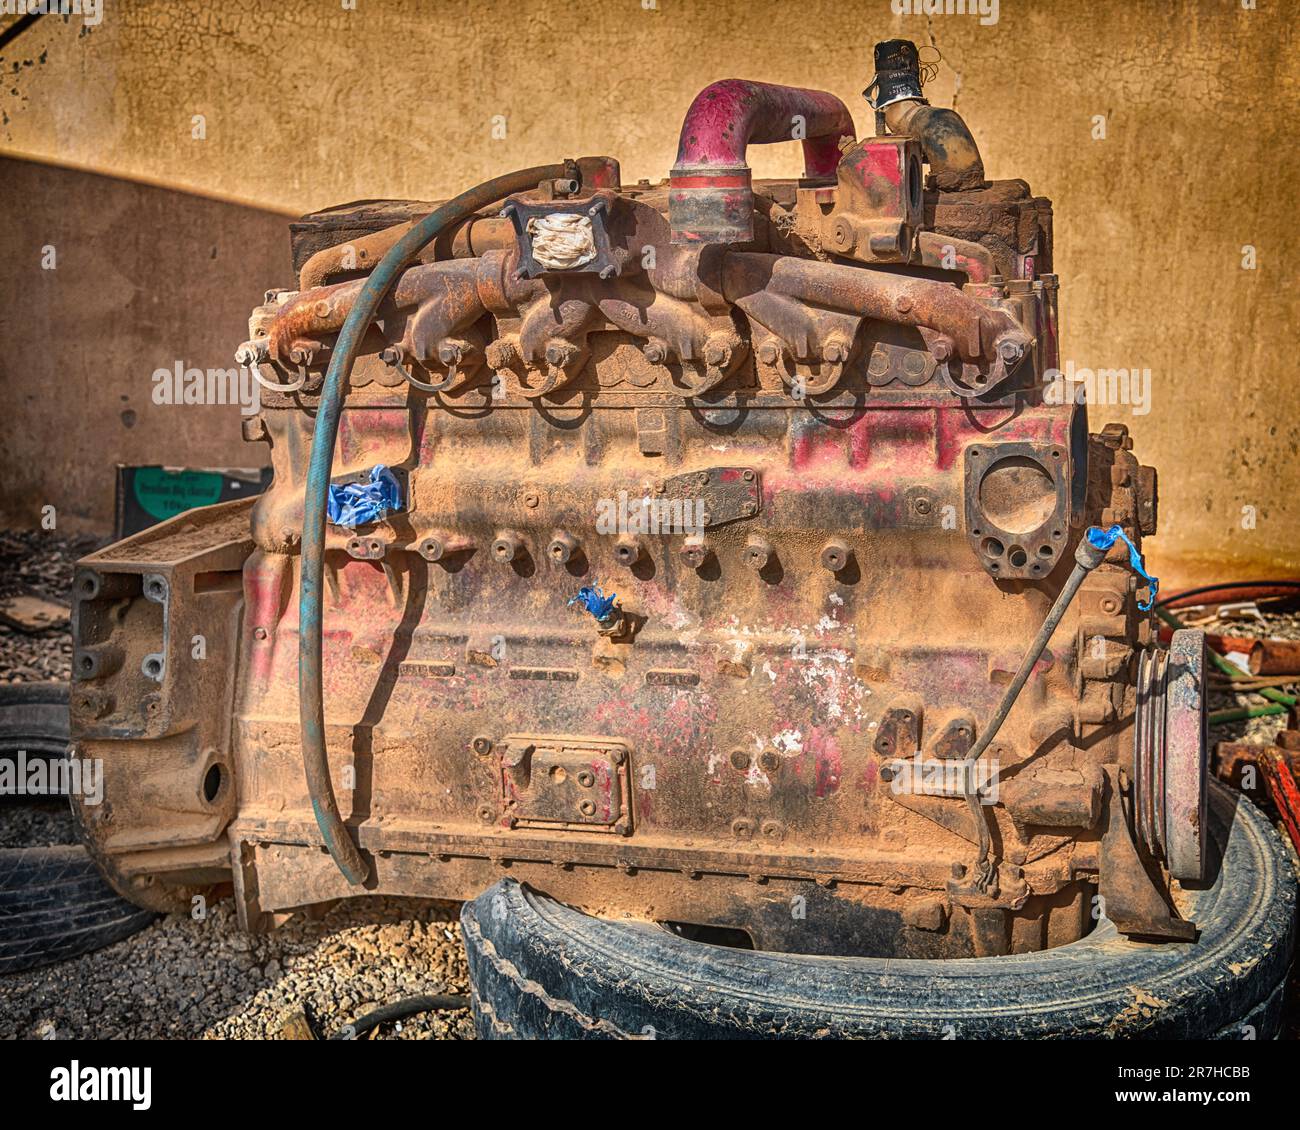 Schrottplatz Truck Engines – HDR-Look Stockfoto